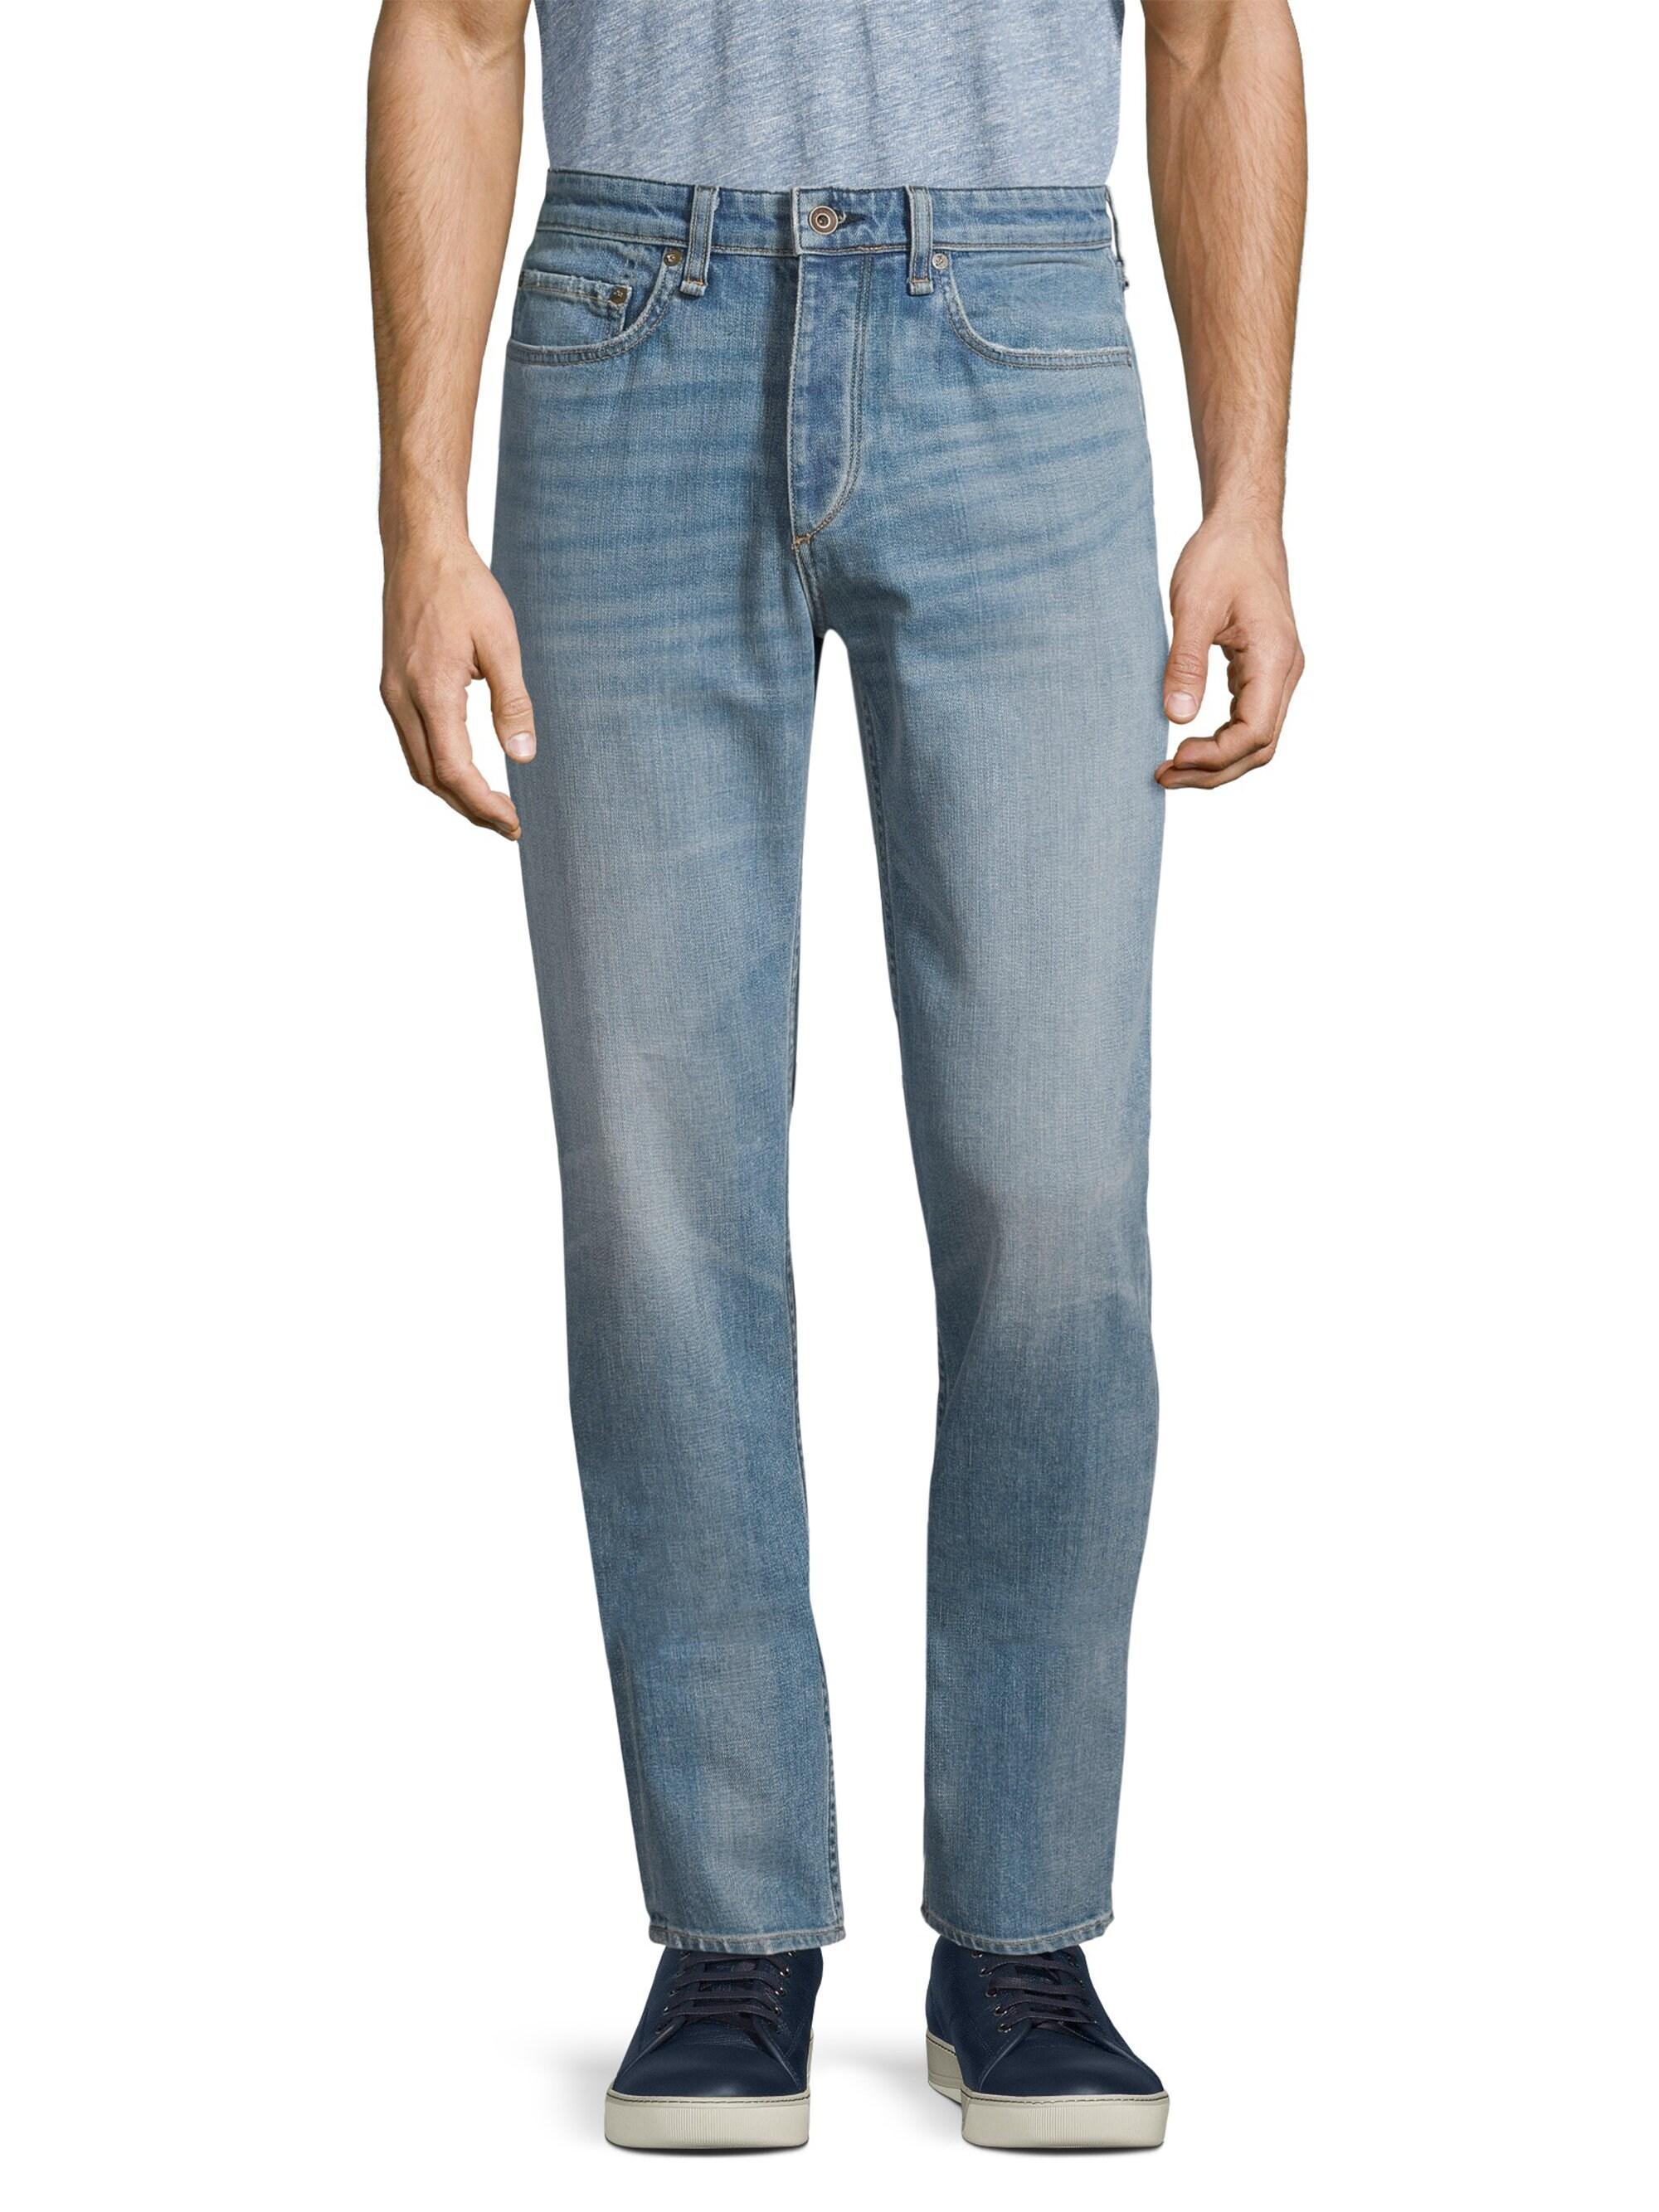 Rag & Bone Slim Fit Jeans in Blue for Men - Lyst